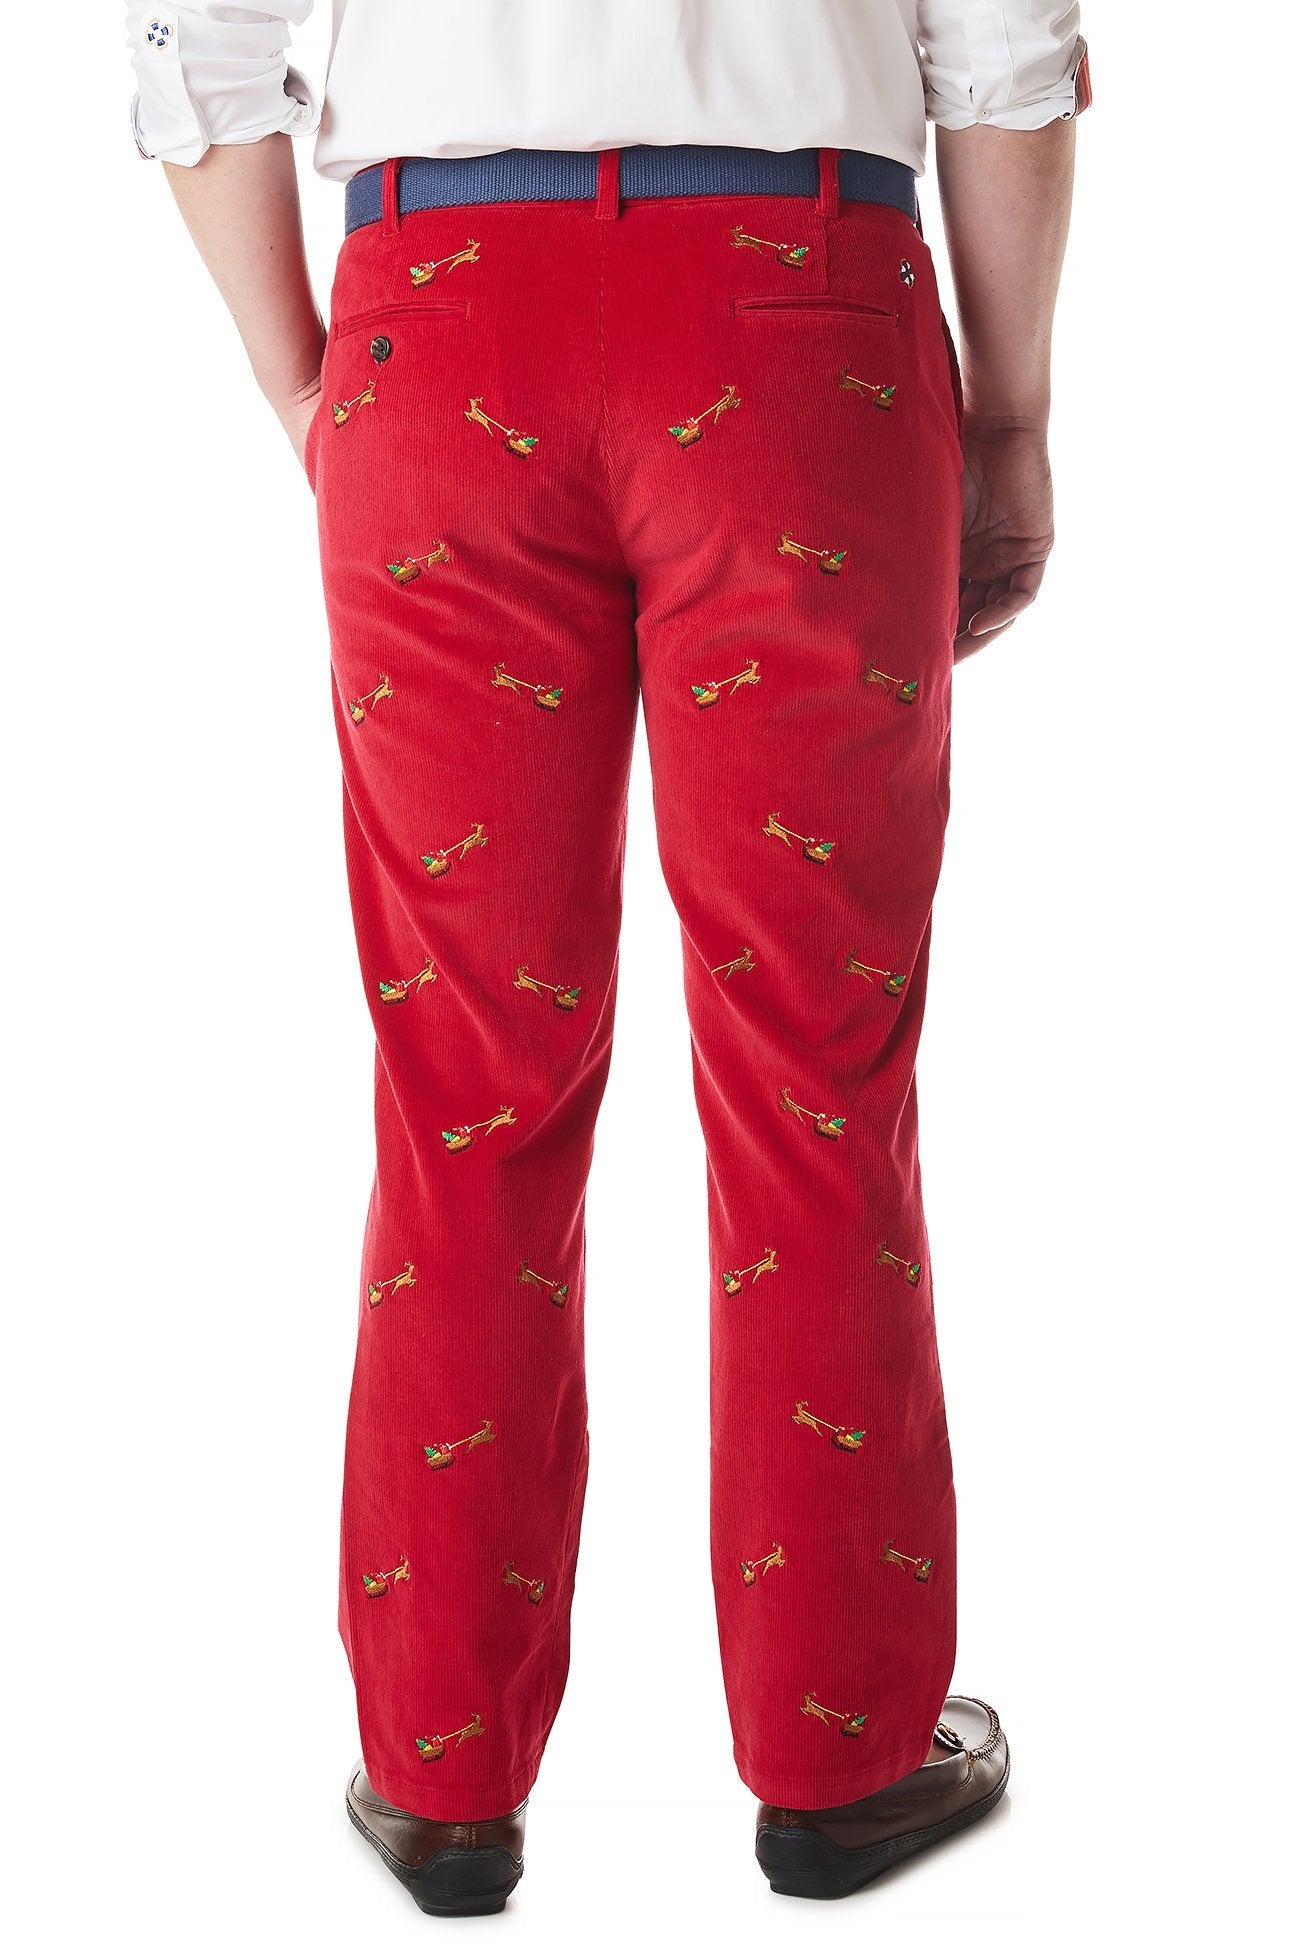 Beachcomber Corduroy Pant Crimson with Santa Sleigh